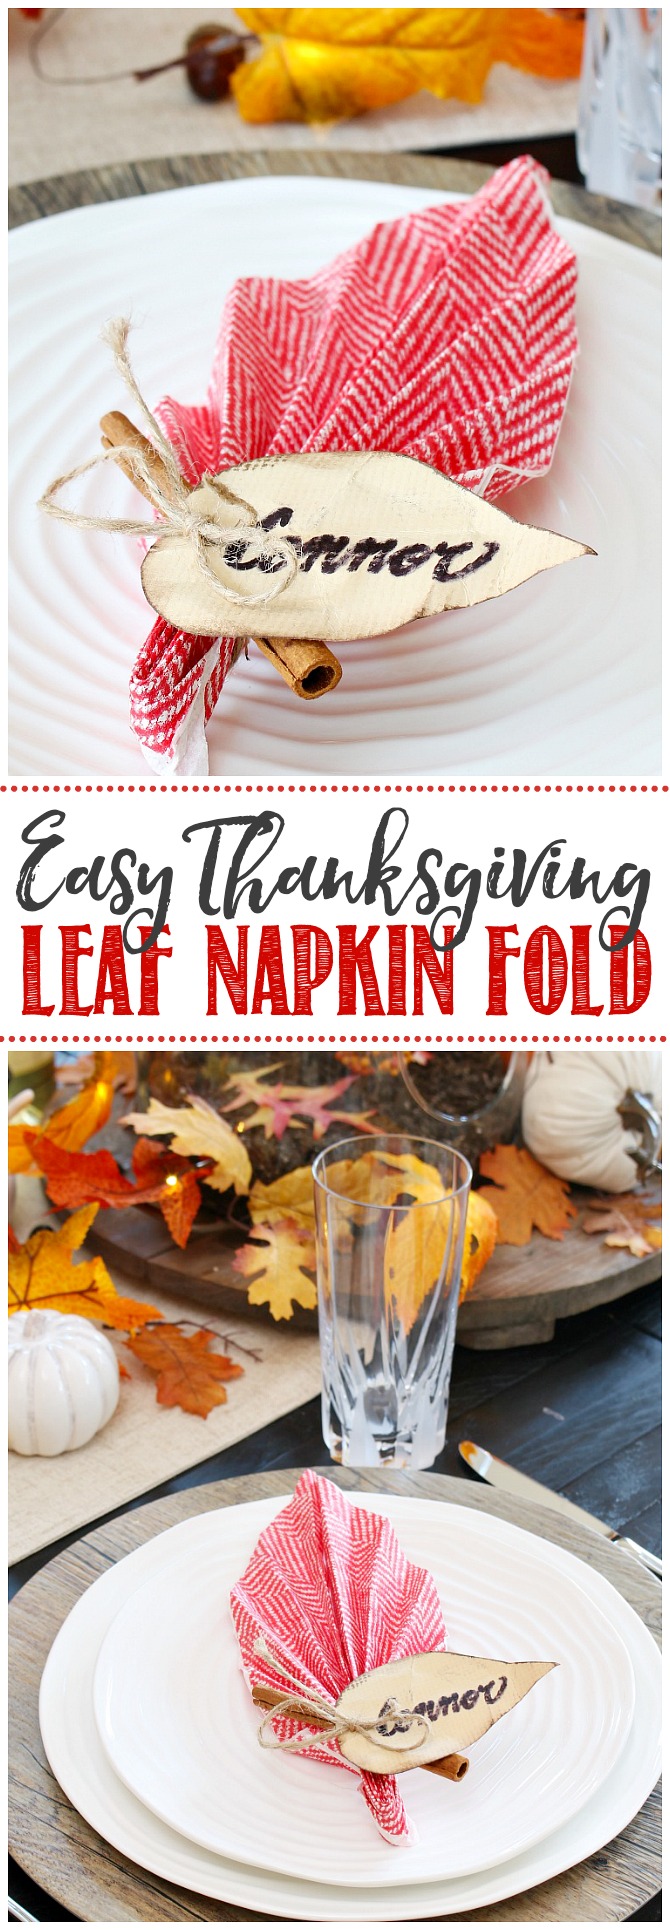 https://www.cleanandscentsible.com/wp-content/uploads/2017/11/Easy-Thanksgiving-Leaf-Napkin-Fold.jpg